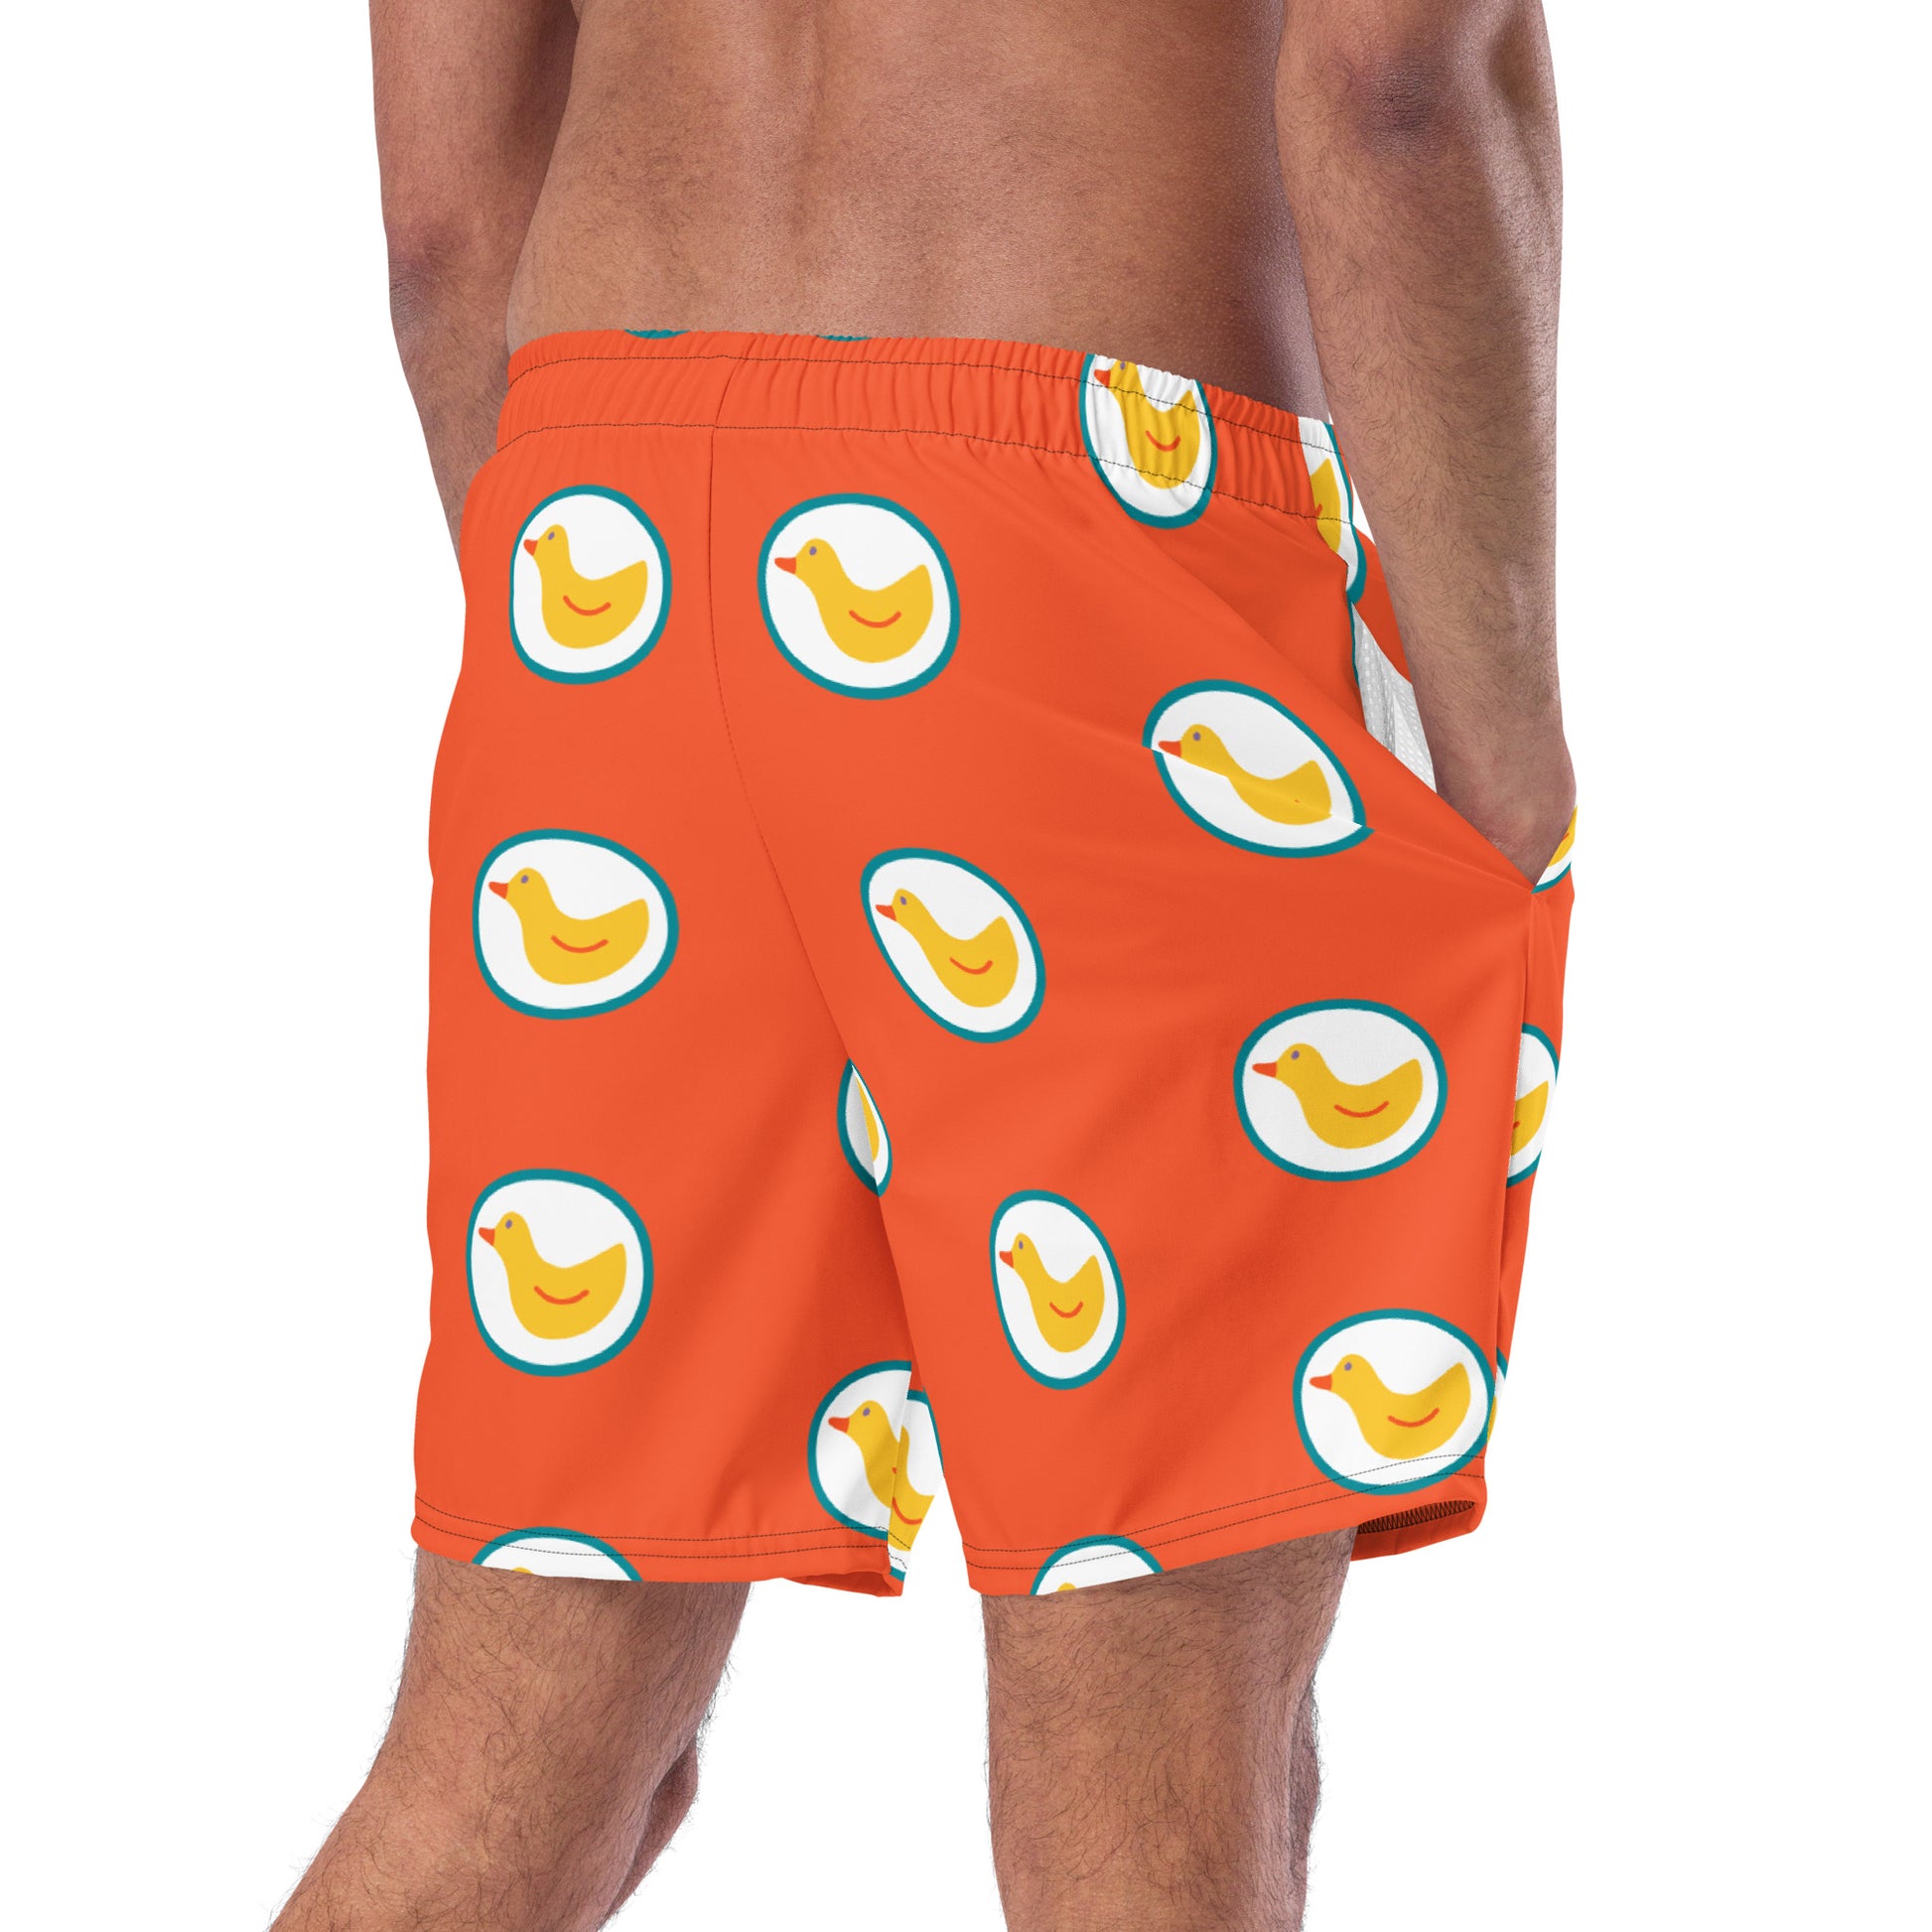 Men with Orange swim trunks with print of ducks